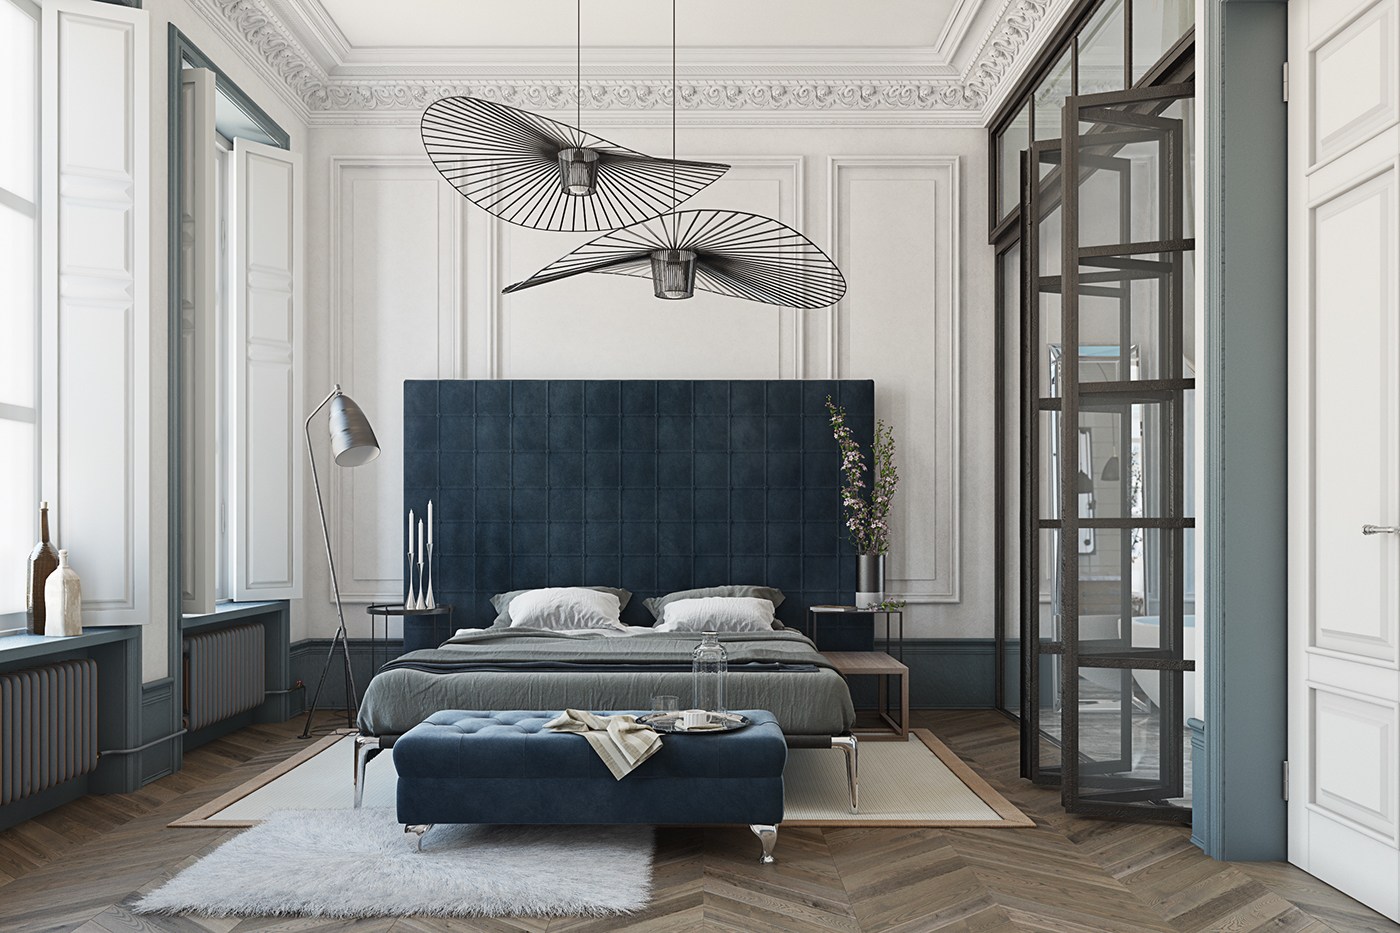 bedroom design ideas with heirloom furniture